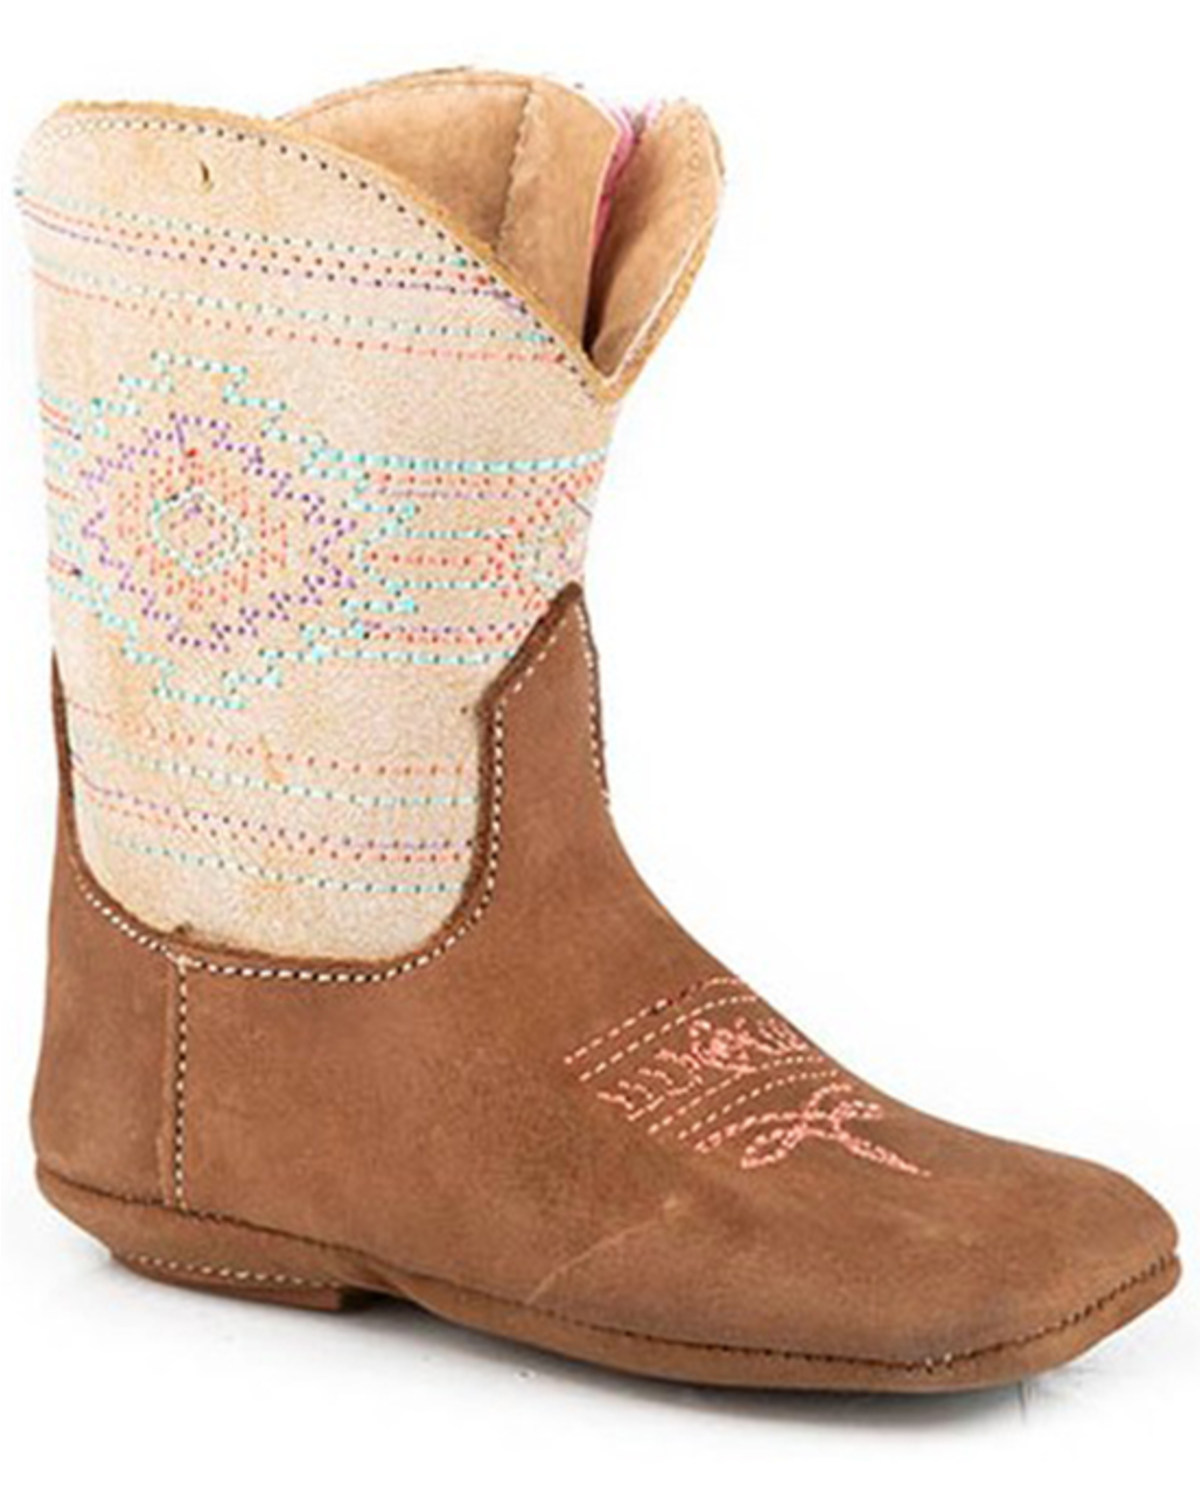 Roper Infant Girls' Southwestern Western Boots - Broad Square Toe